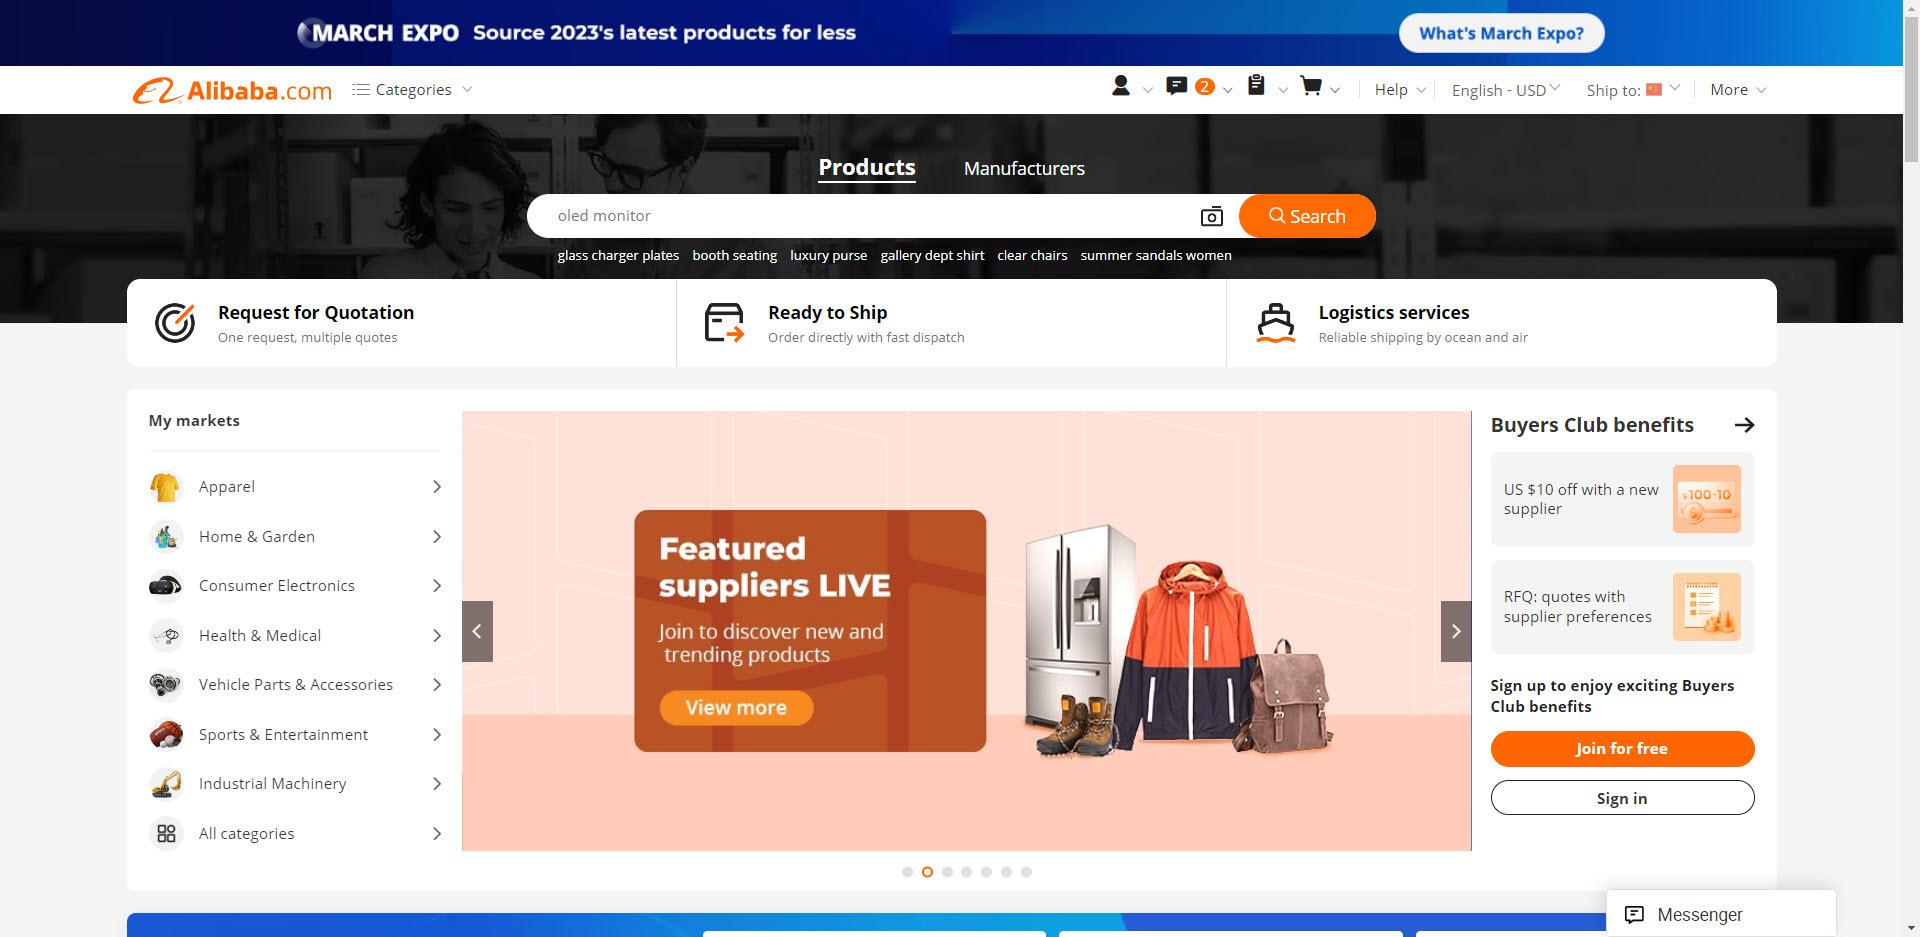 Homepage of Alibaba.com